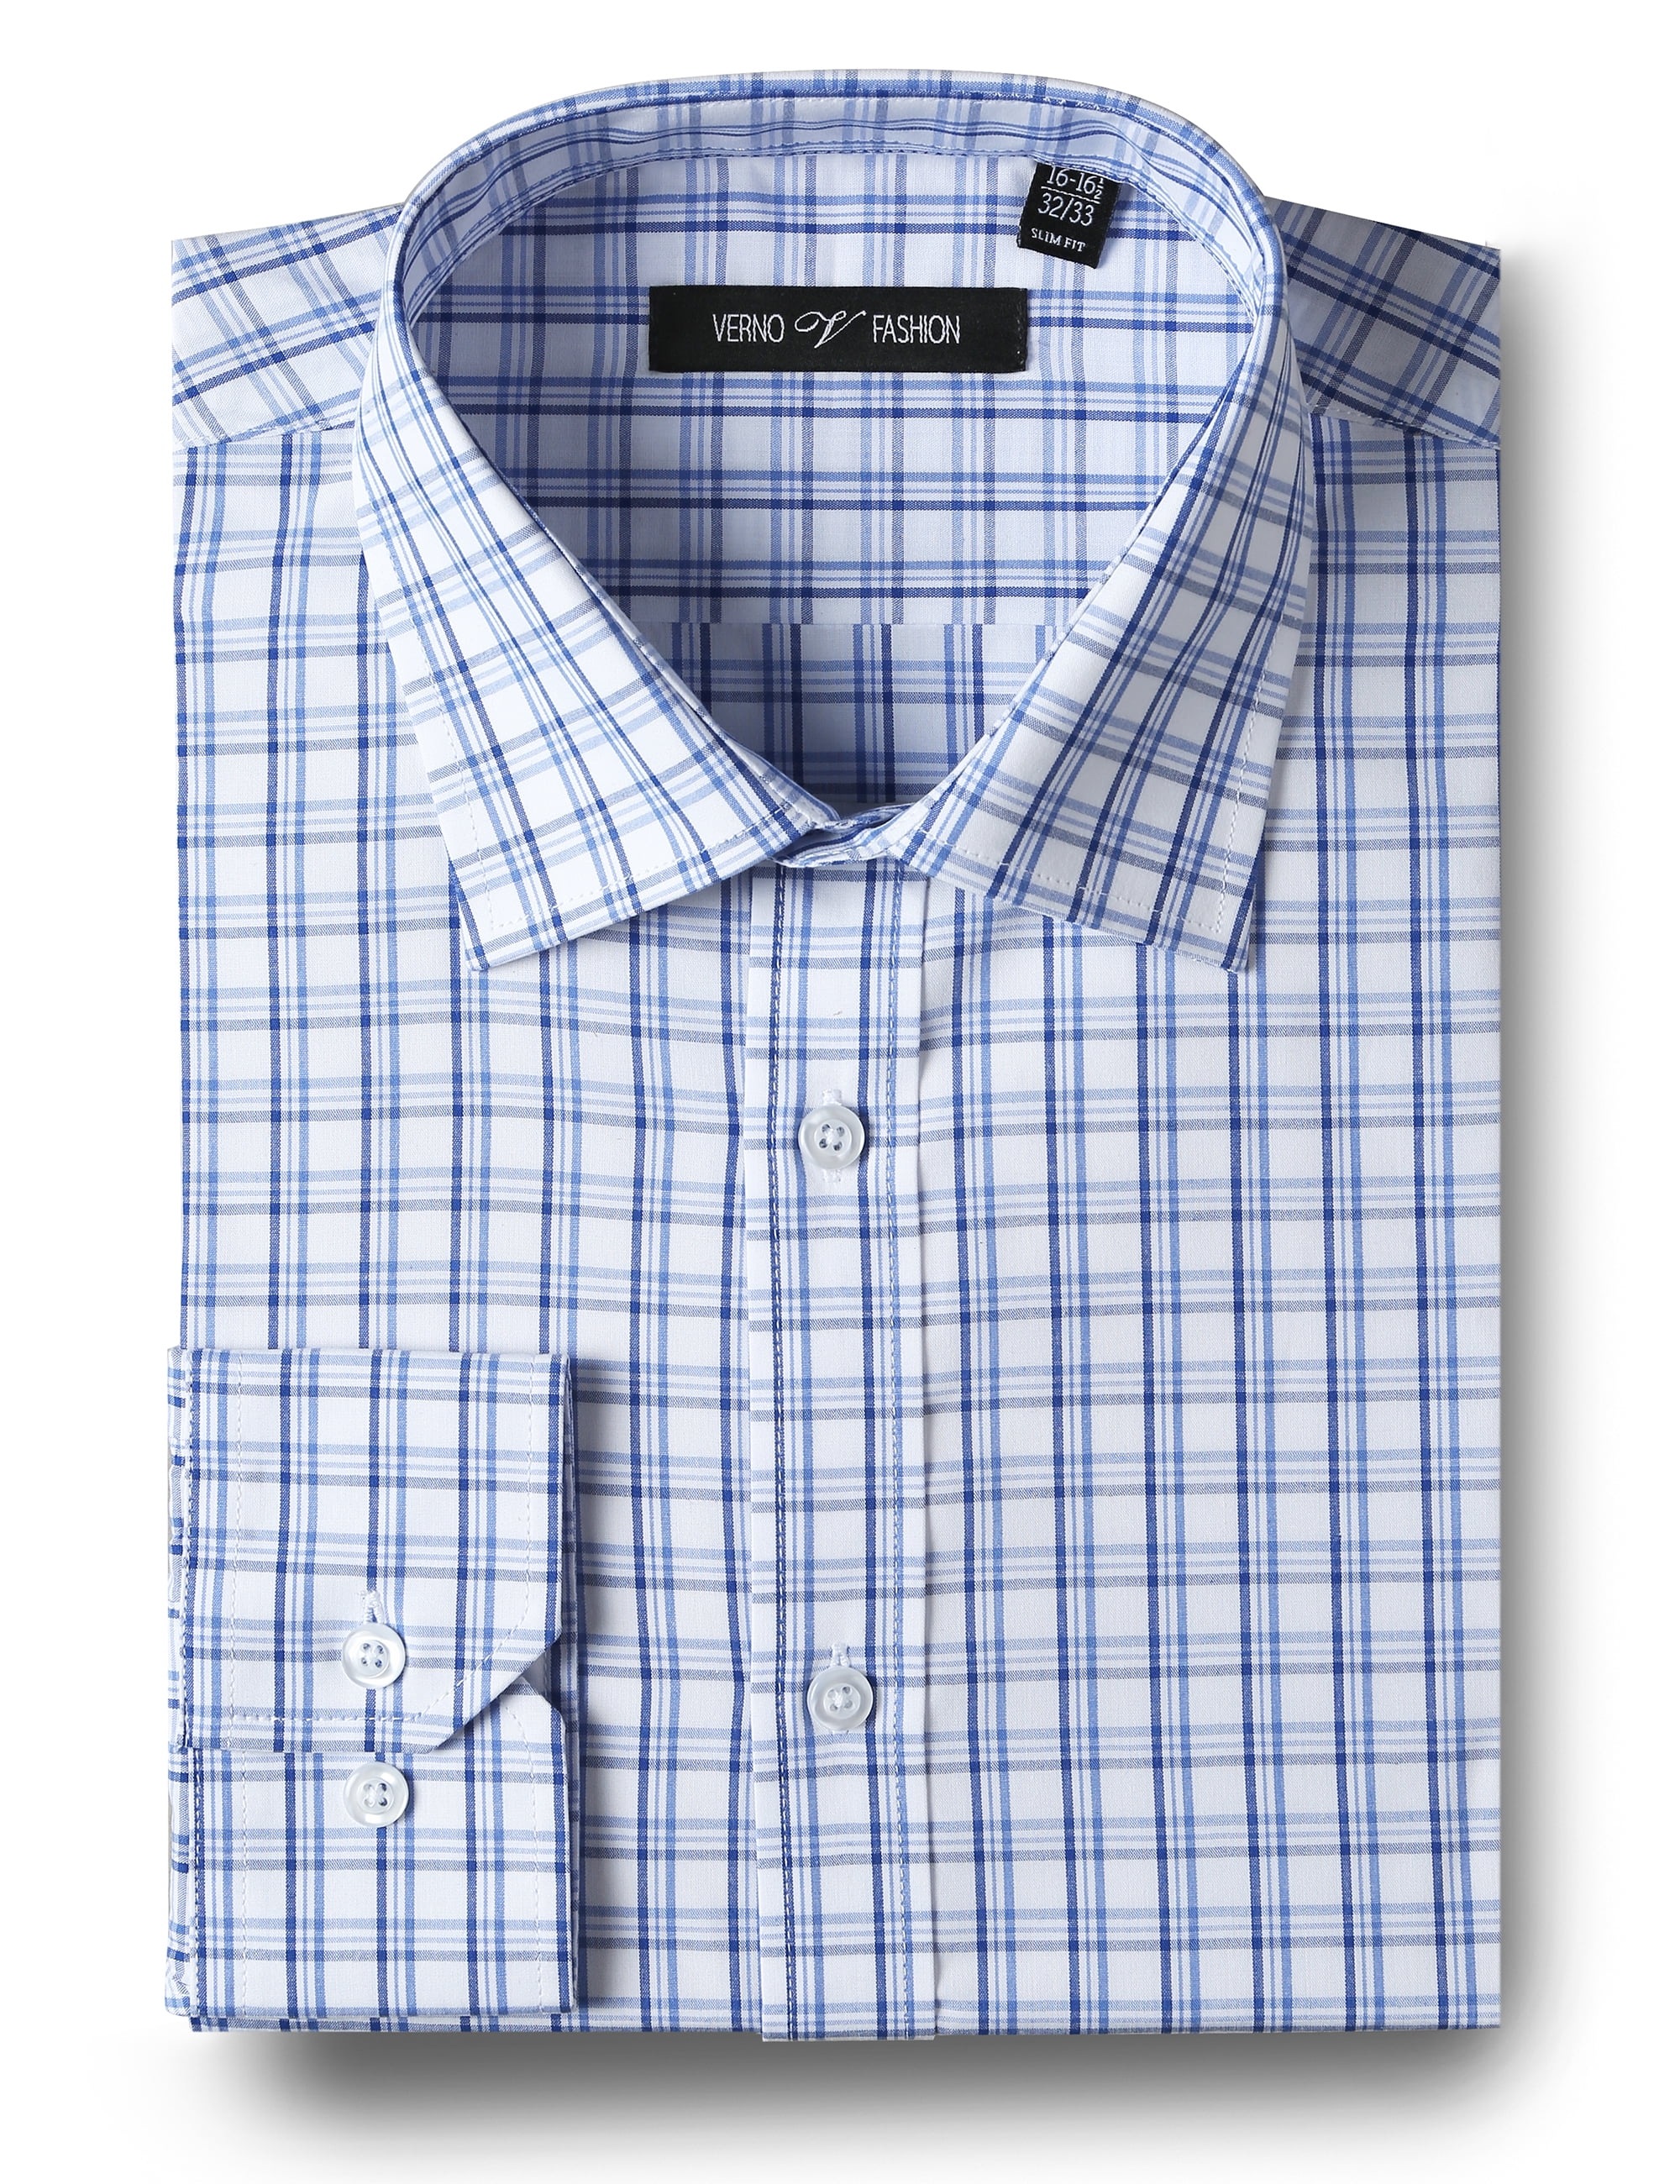 OSRACHTEN Long Sleeve Shirt blue-white check pattern casual look Fashion Formal Shirts Long Sleeve Shirts 